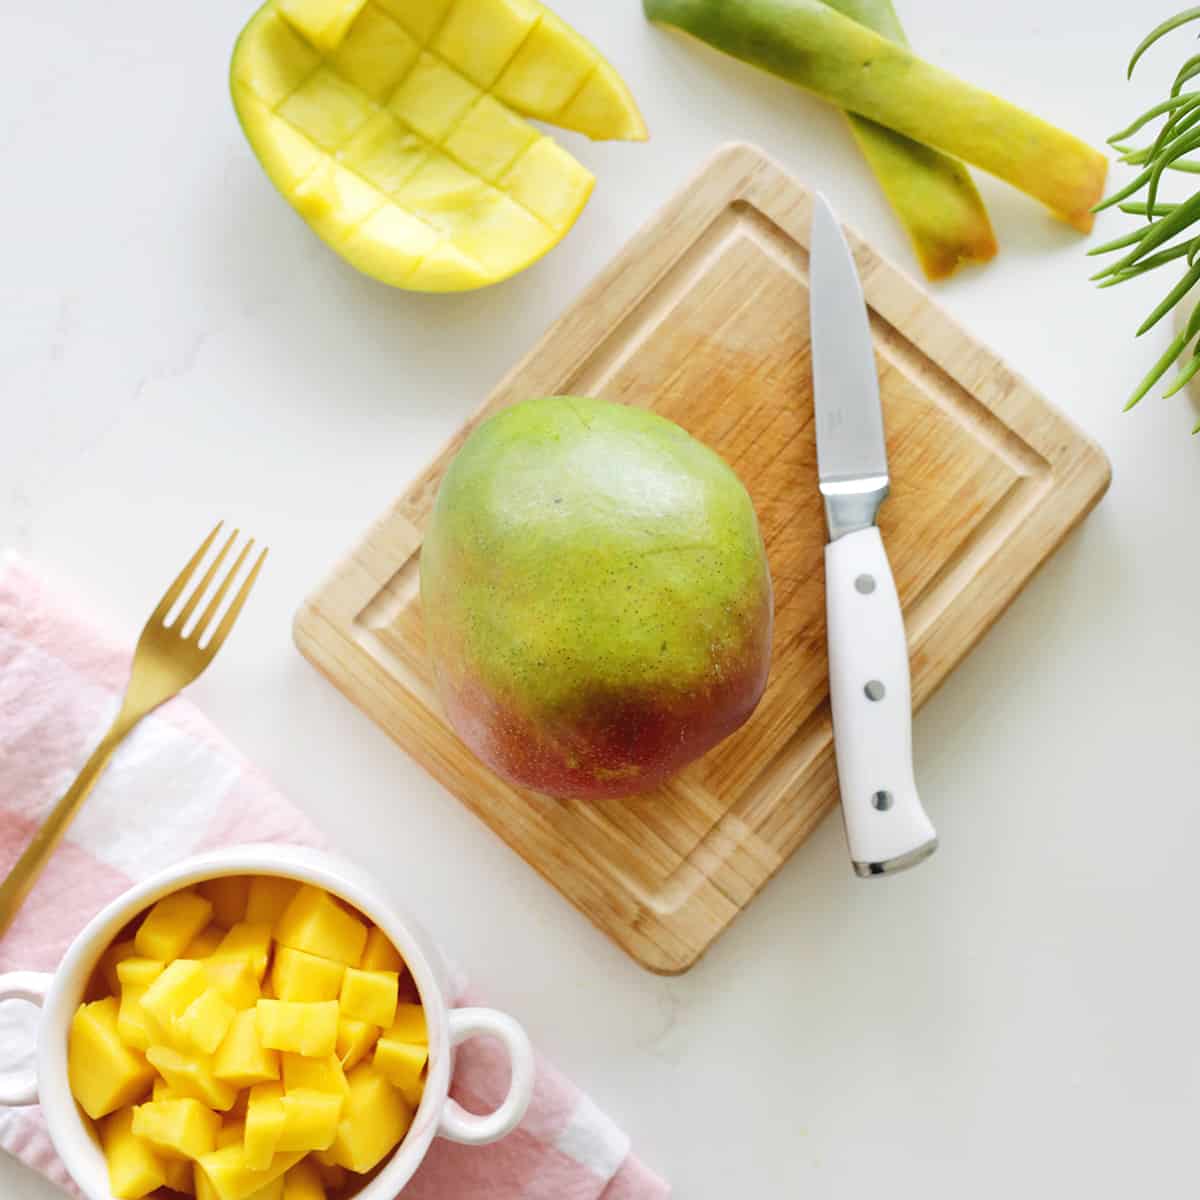 Mango and diced mango on cutting board